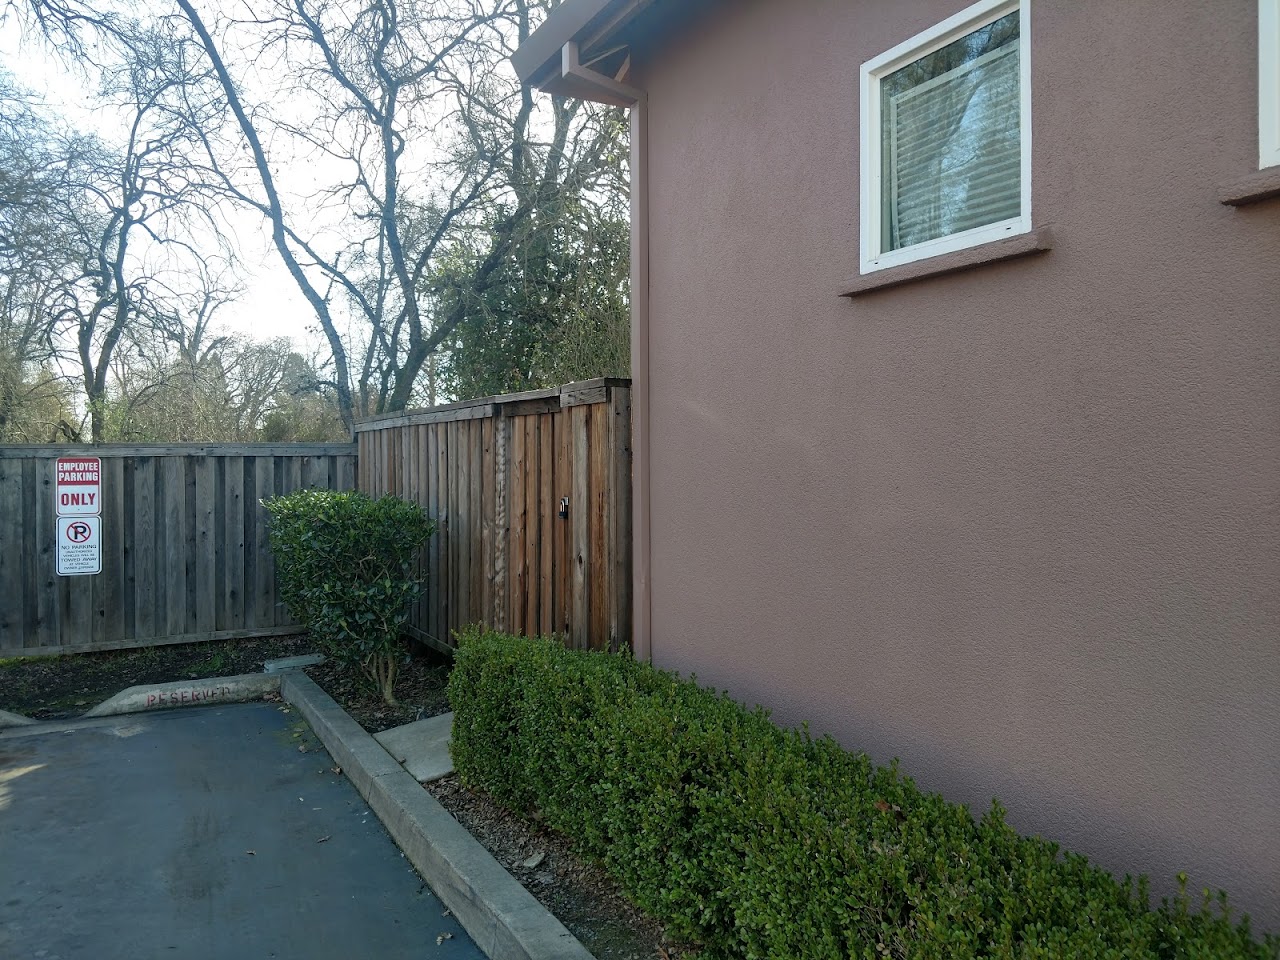 Photo of LARKFIELD OAKS. Affordable housing located at 524 AIRPORT BLVD SANTA ROSA, CA 95403